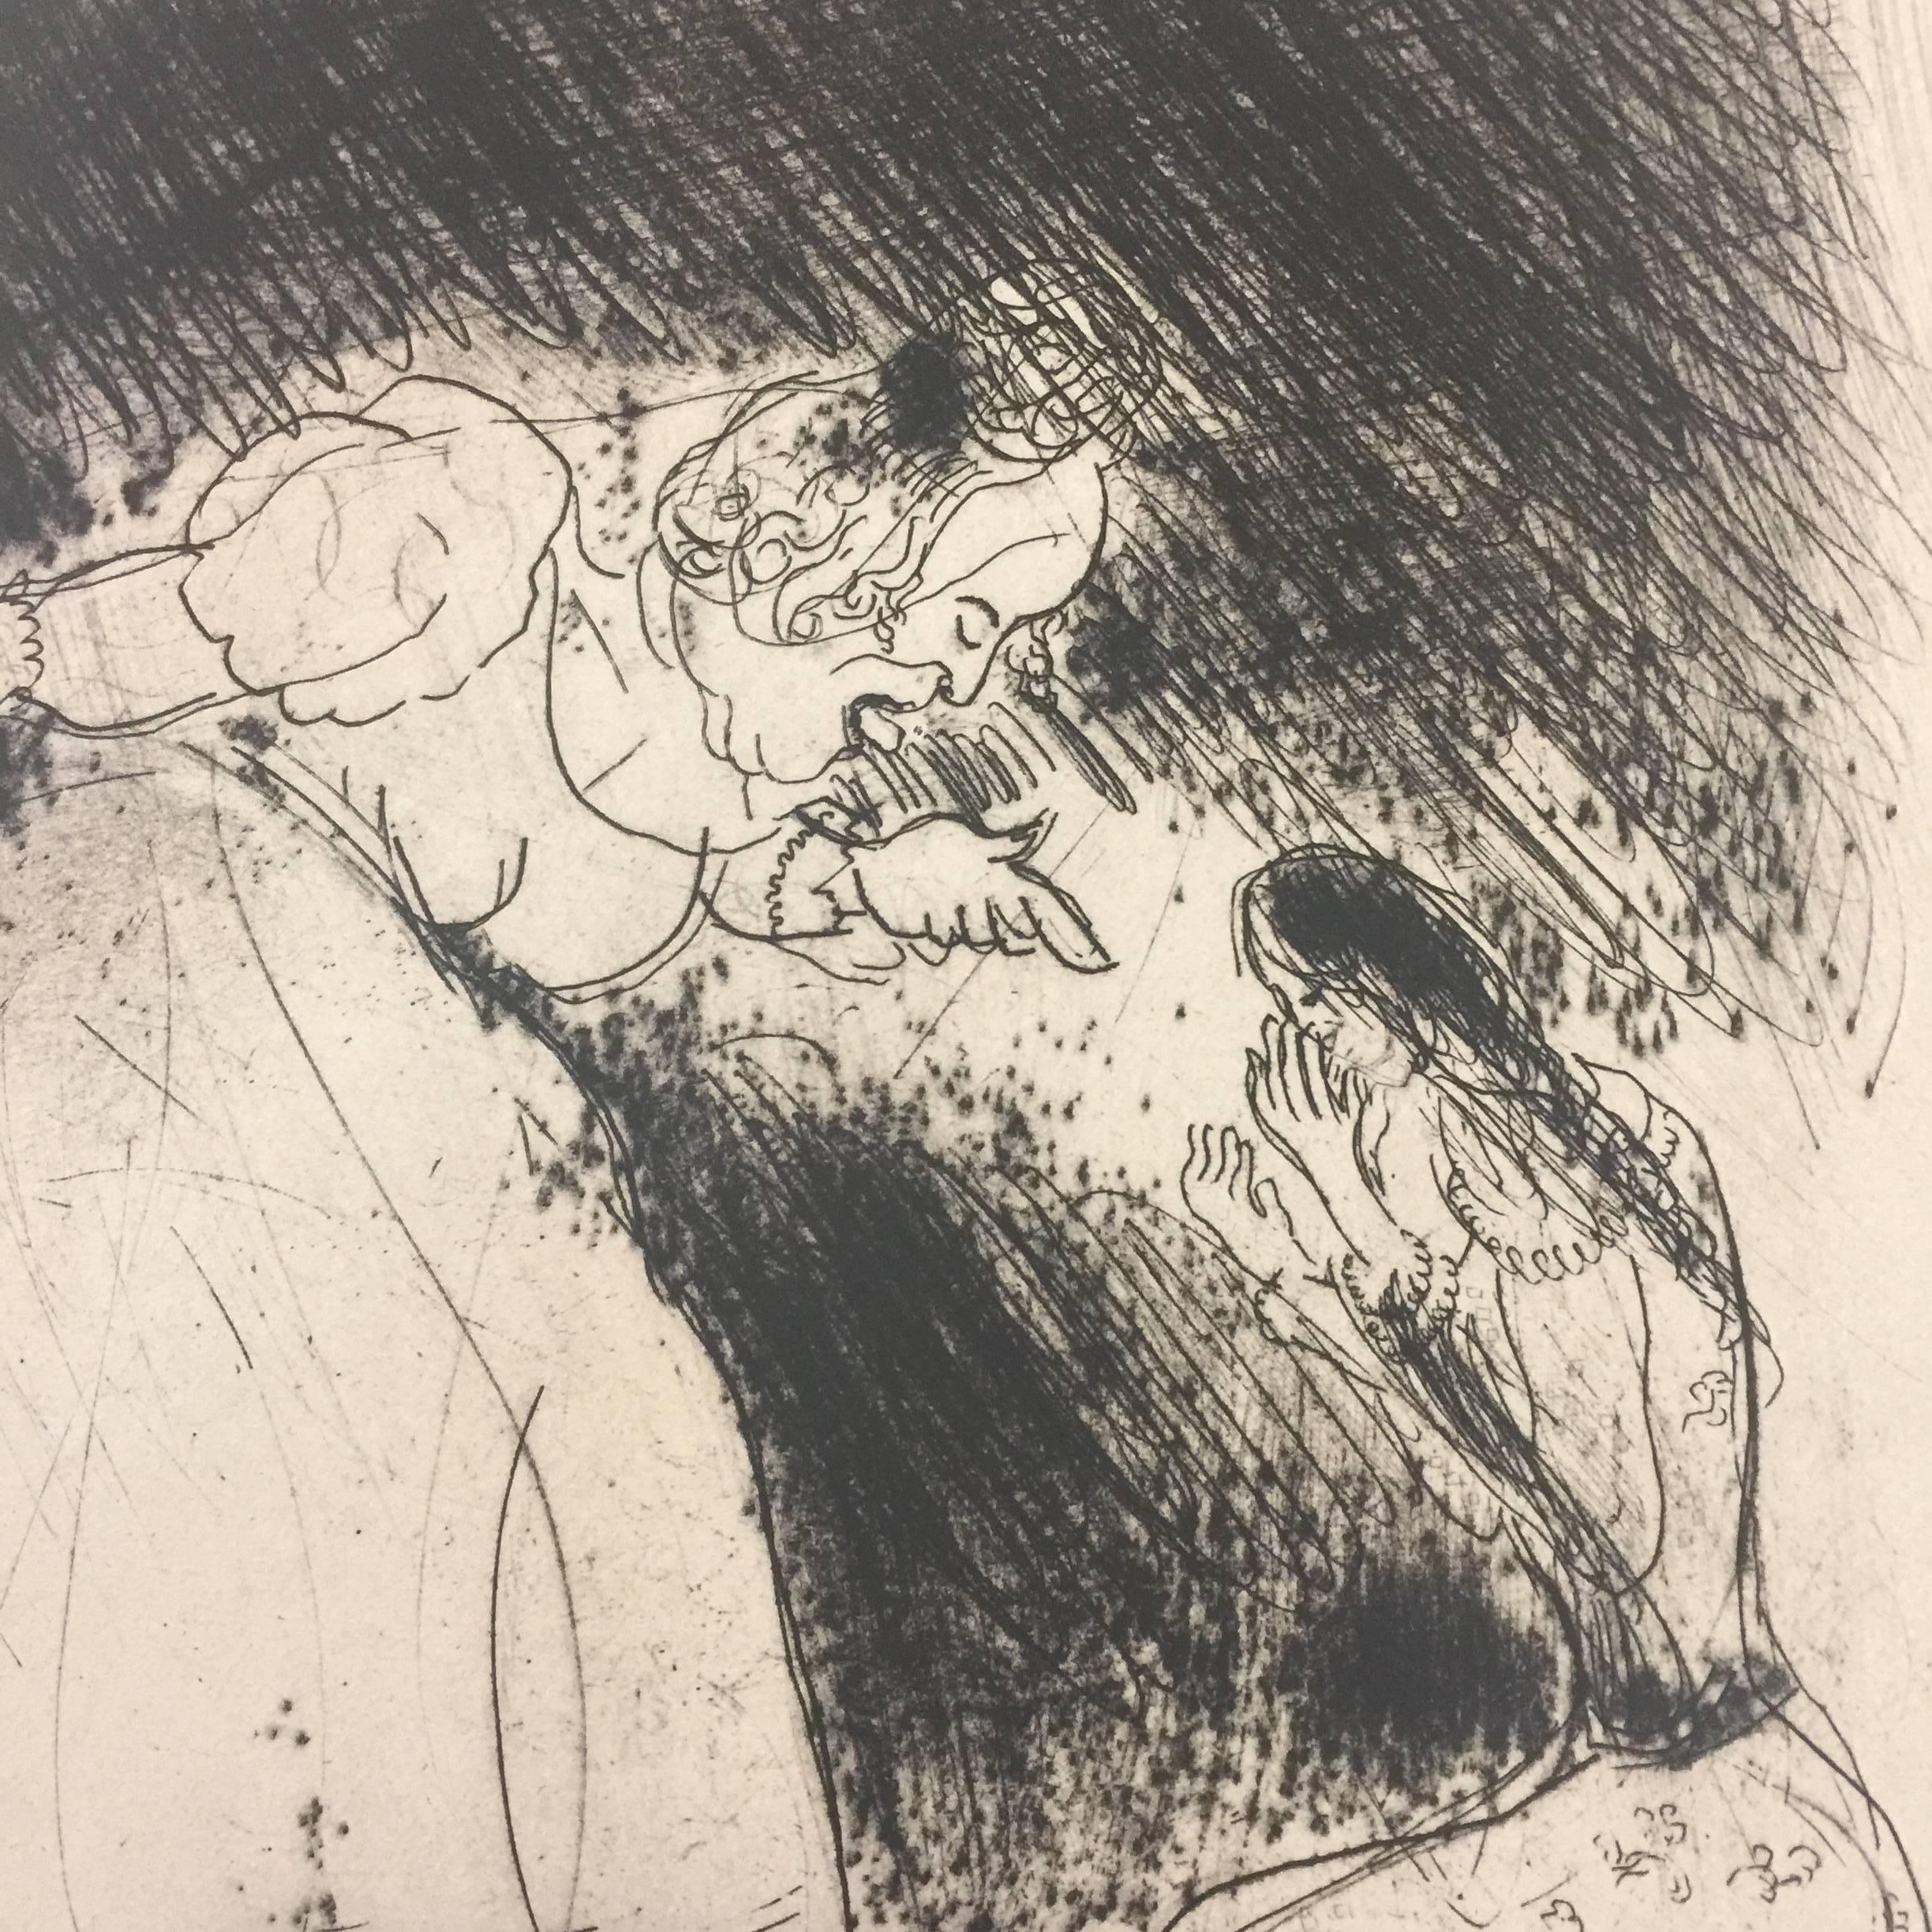 La Femme du Gouverneur Gronde sa Fille - From the series “Les Ames Mortes” - Surrealist Print by Marc Chagall